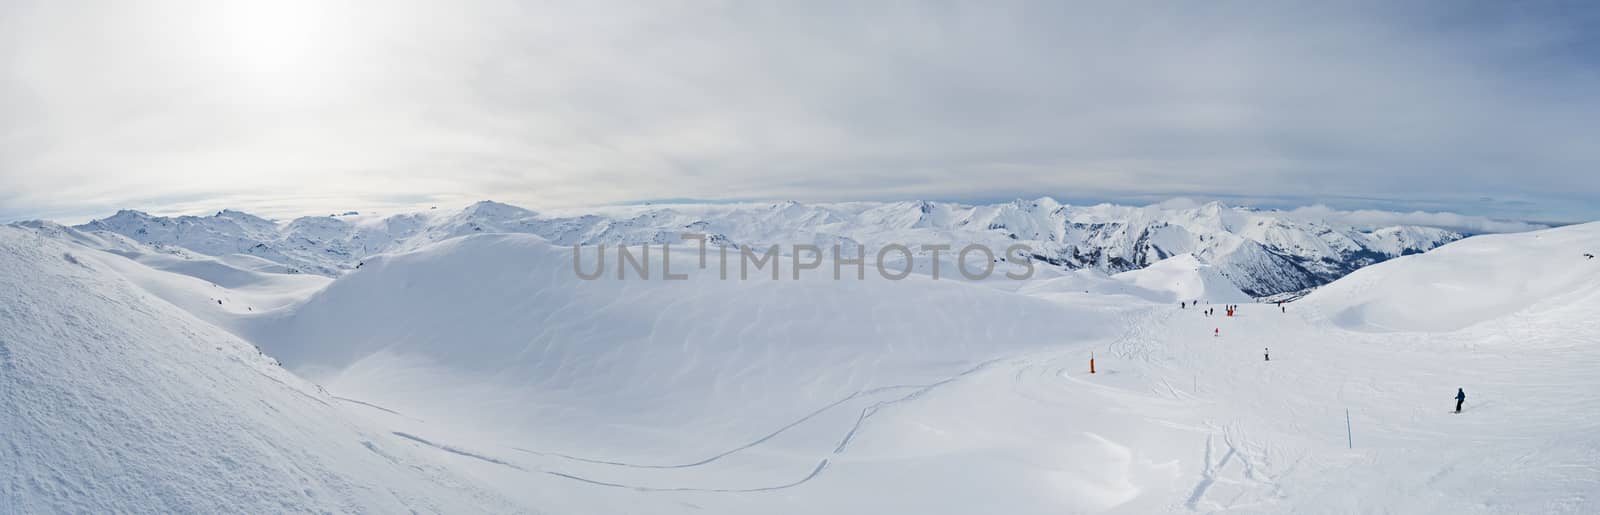 Panoramic view across snow covered alpine mountain range by paulvinten